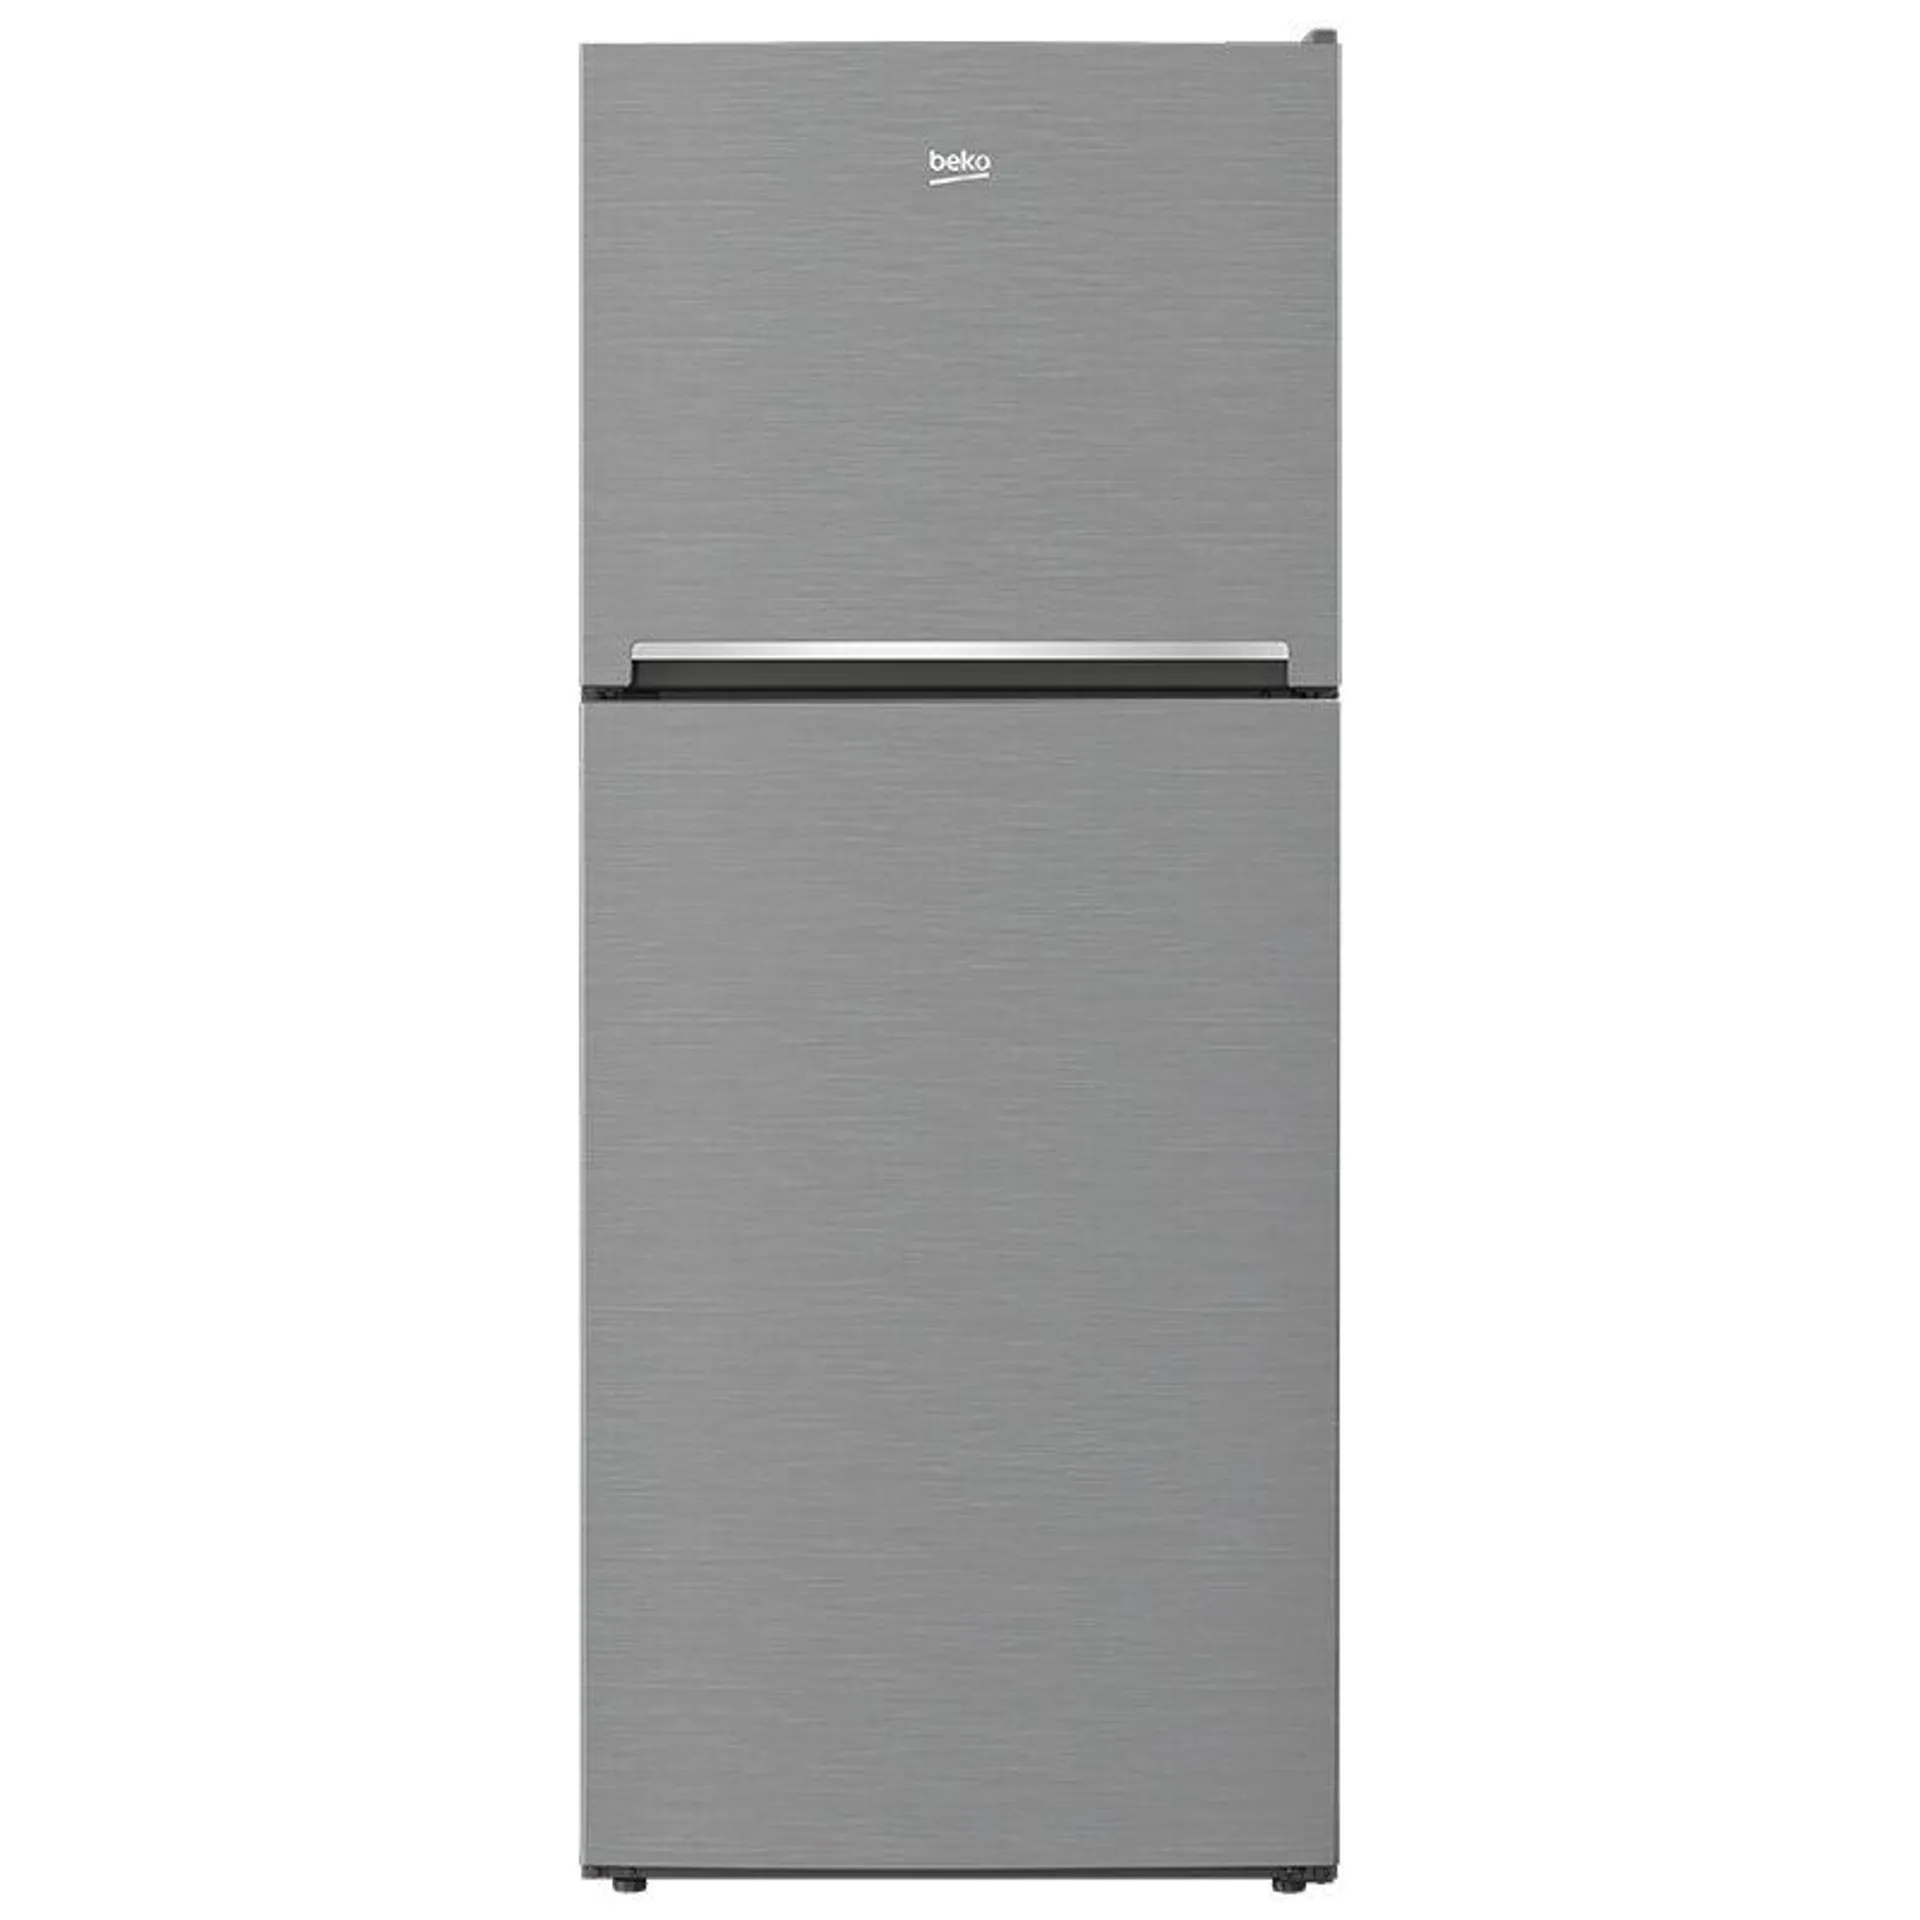 Beko 28 in. 13.5 cu. ft. Counter Depth Top Freezer Refrigerator - Fingerprint Resistant Stainless